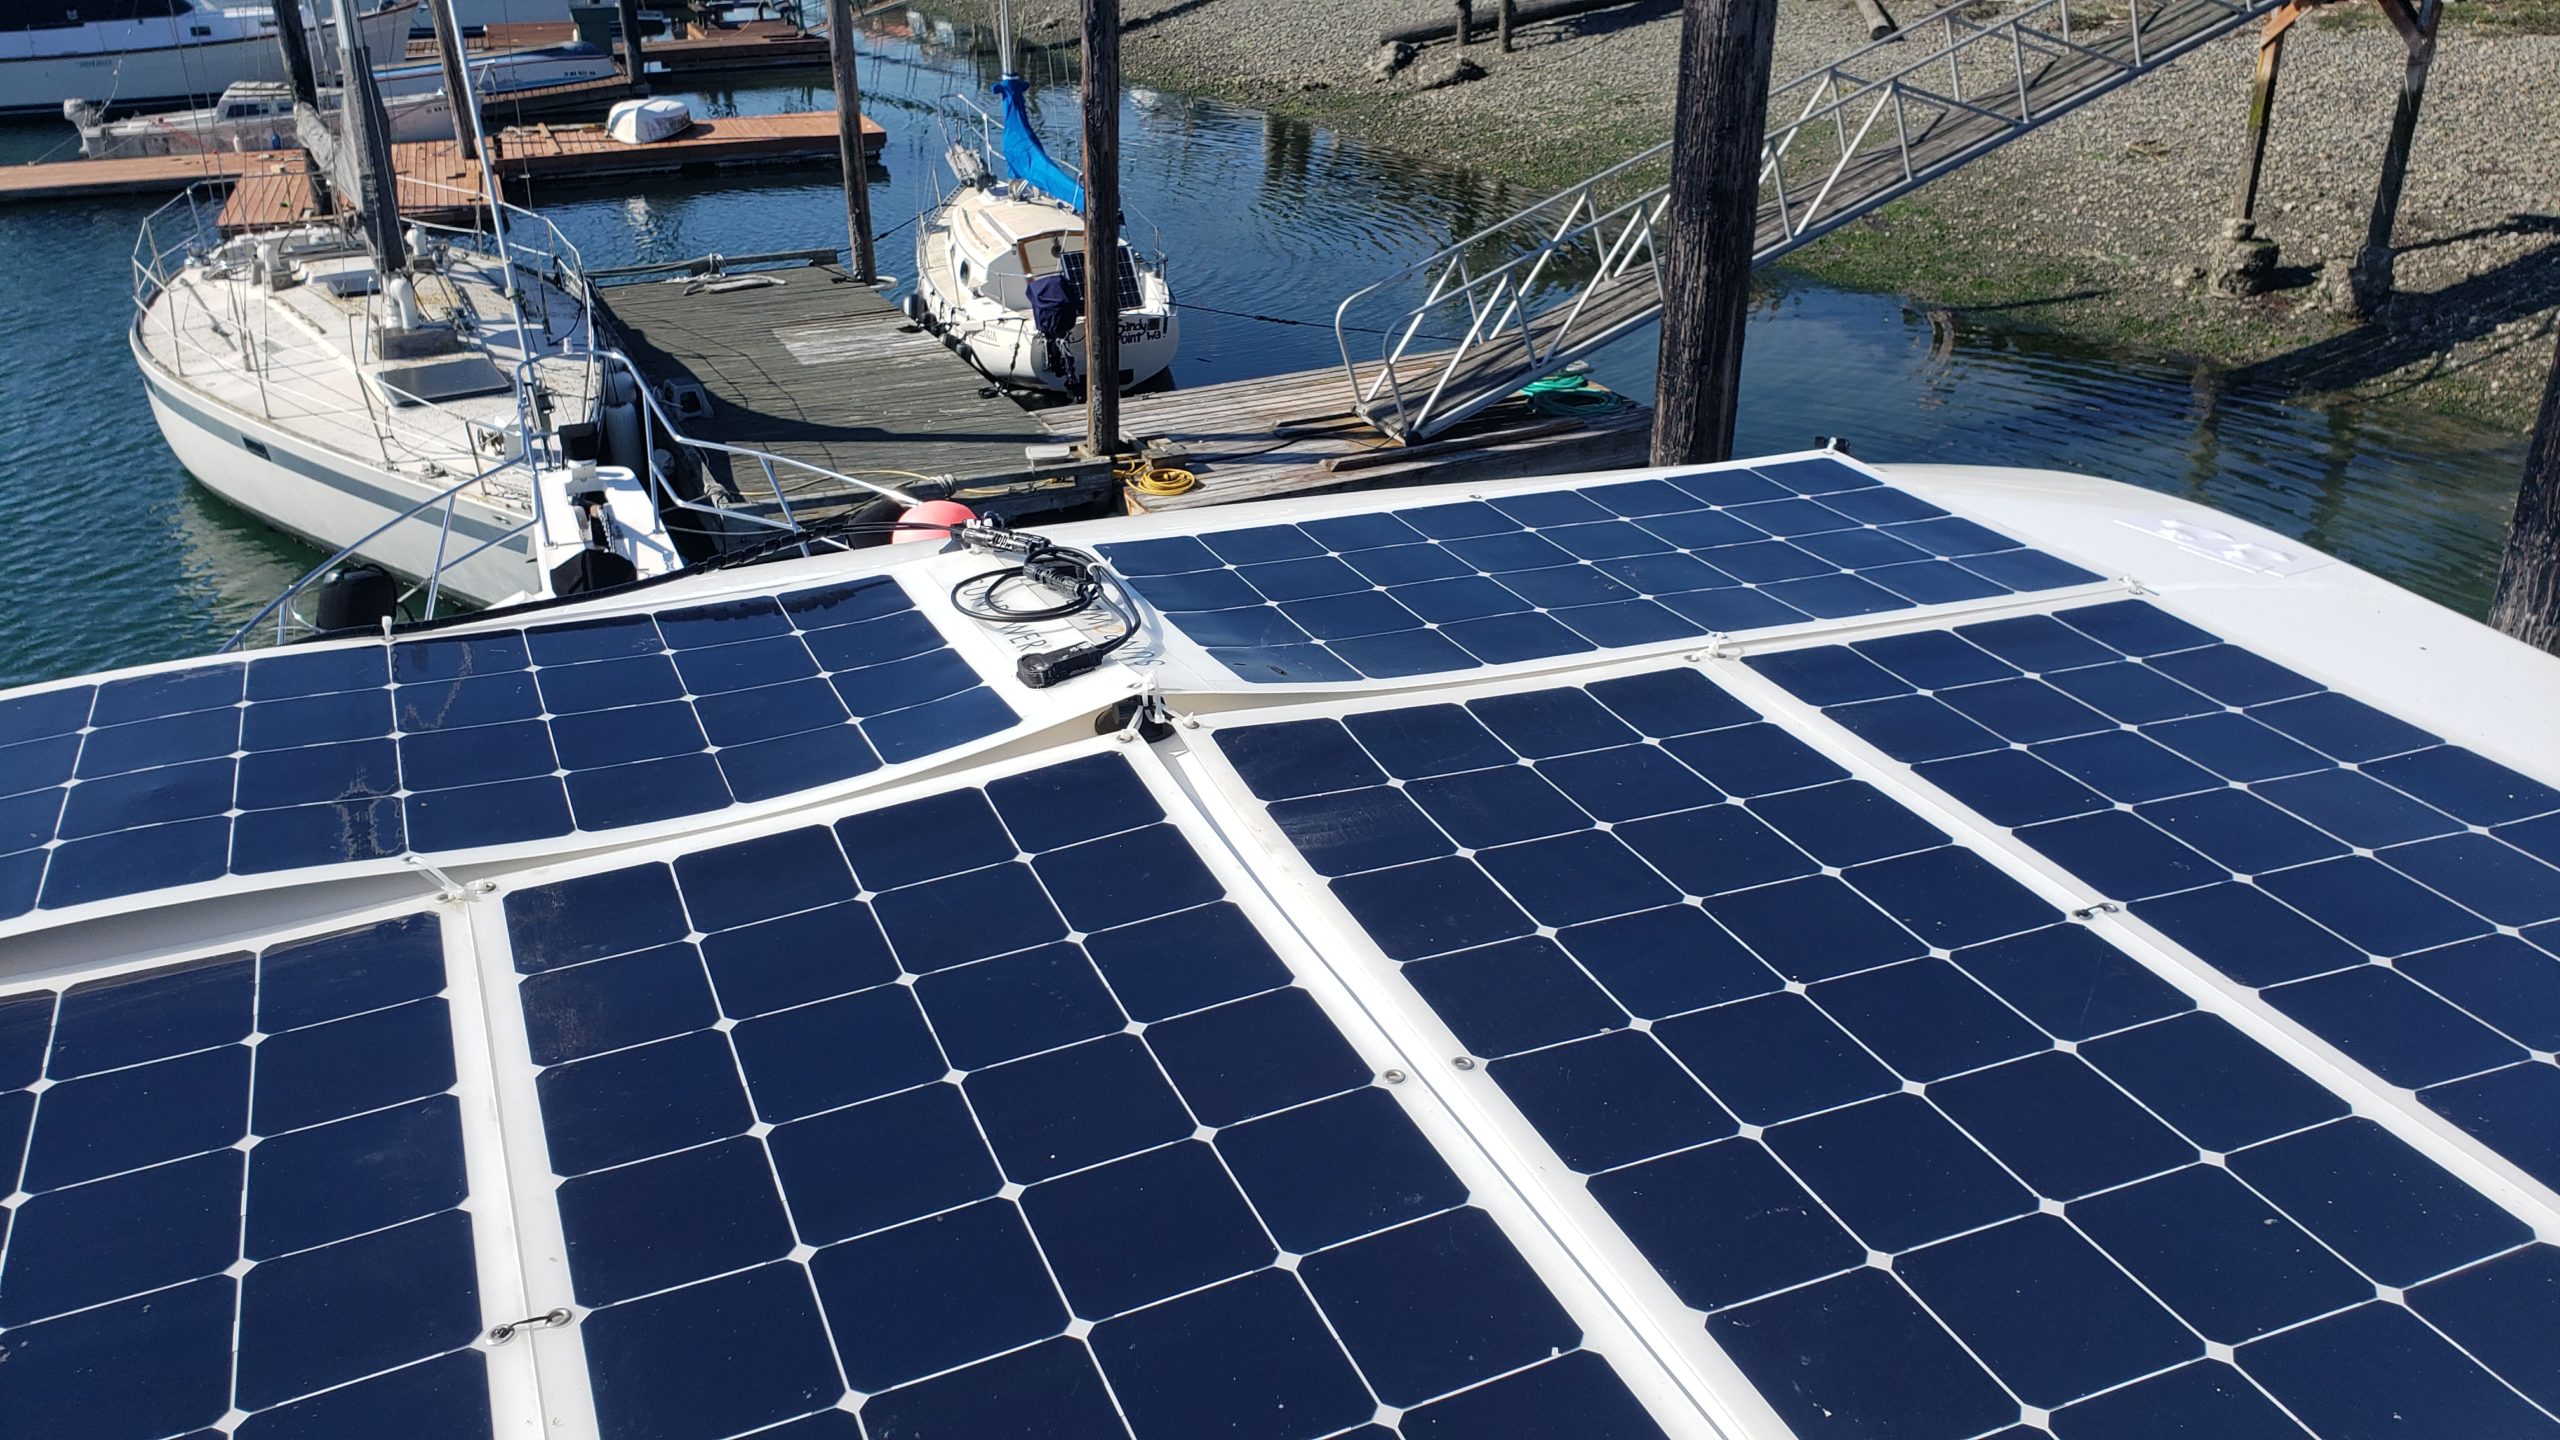 Solar Panels Back On For The Season